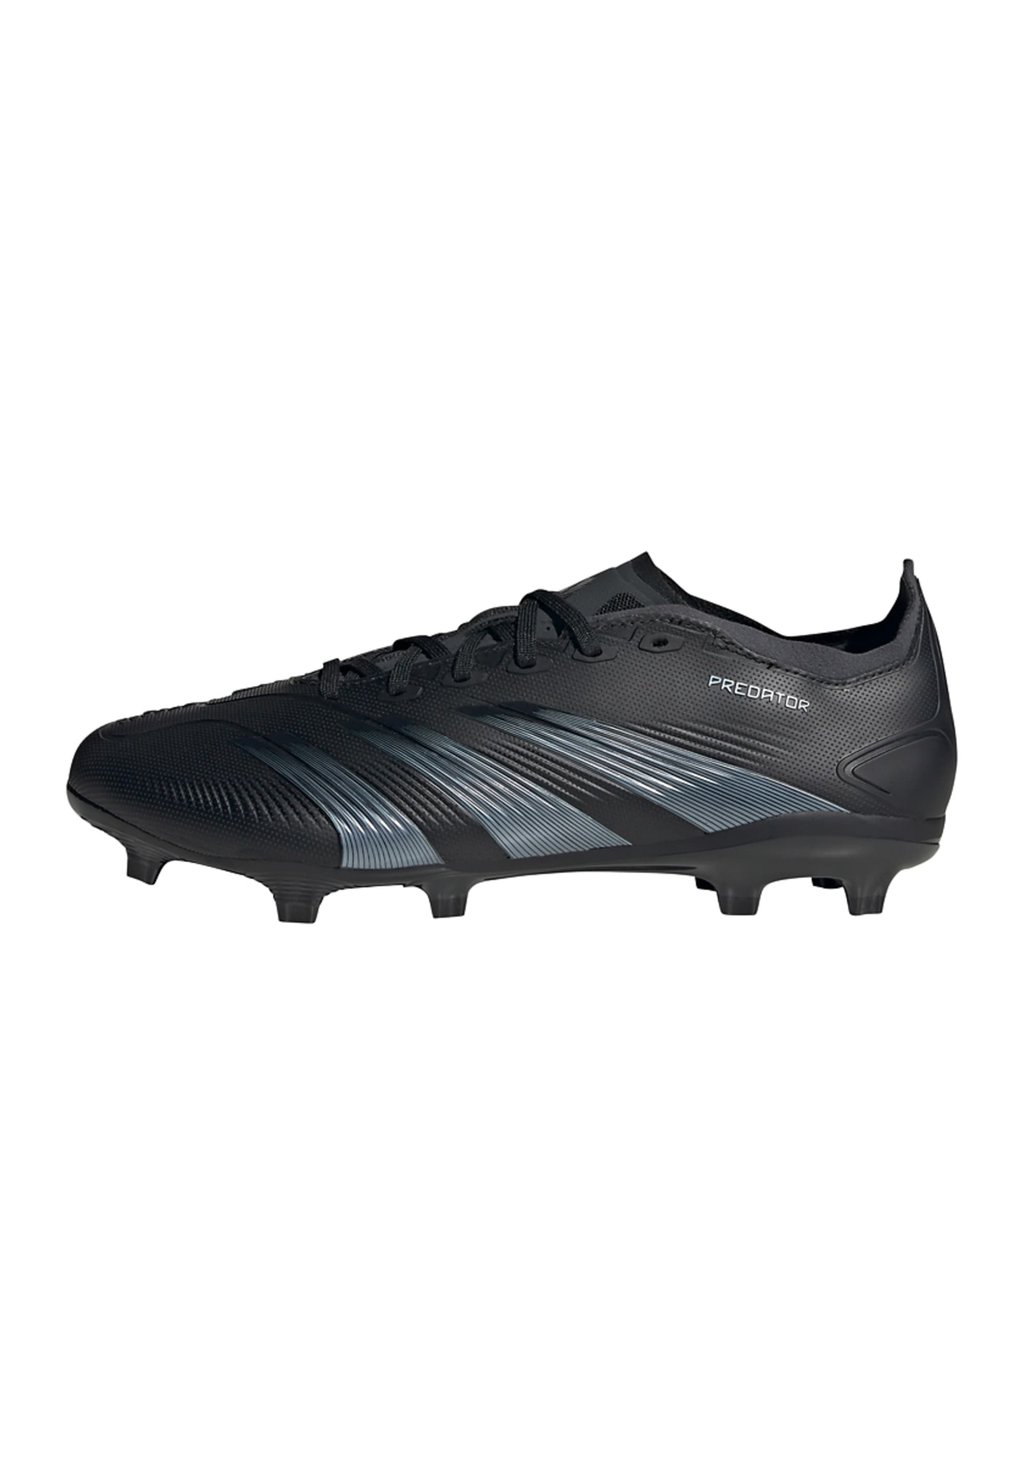 Футбольные бутсы с шипами PREDATOR LEAGUE FG adidas Performance, цвет core black/carbon/core black